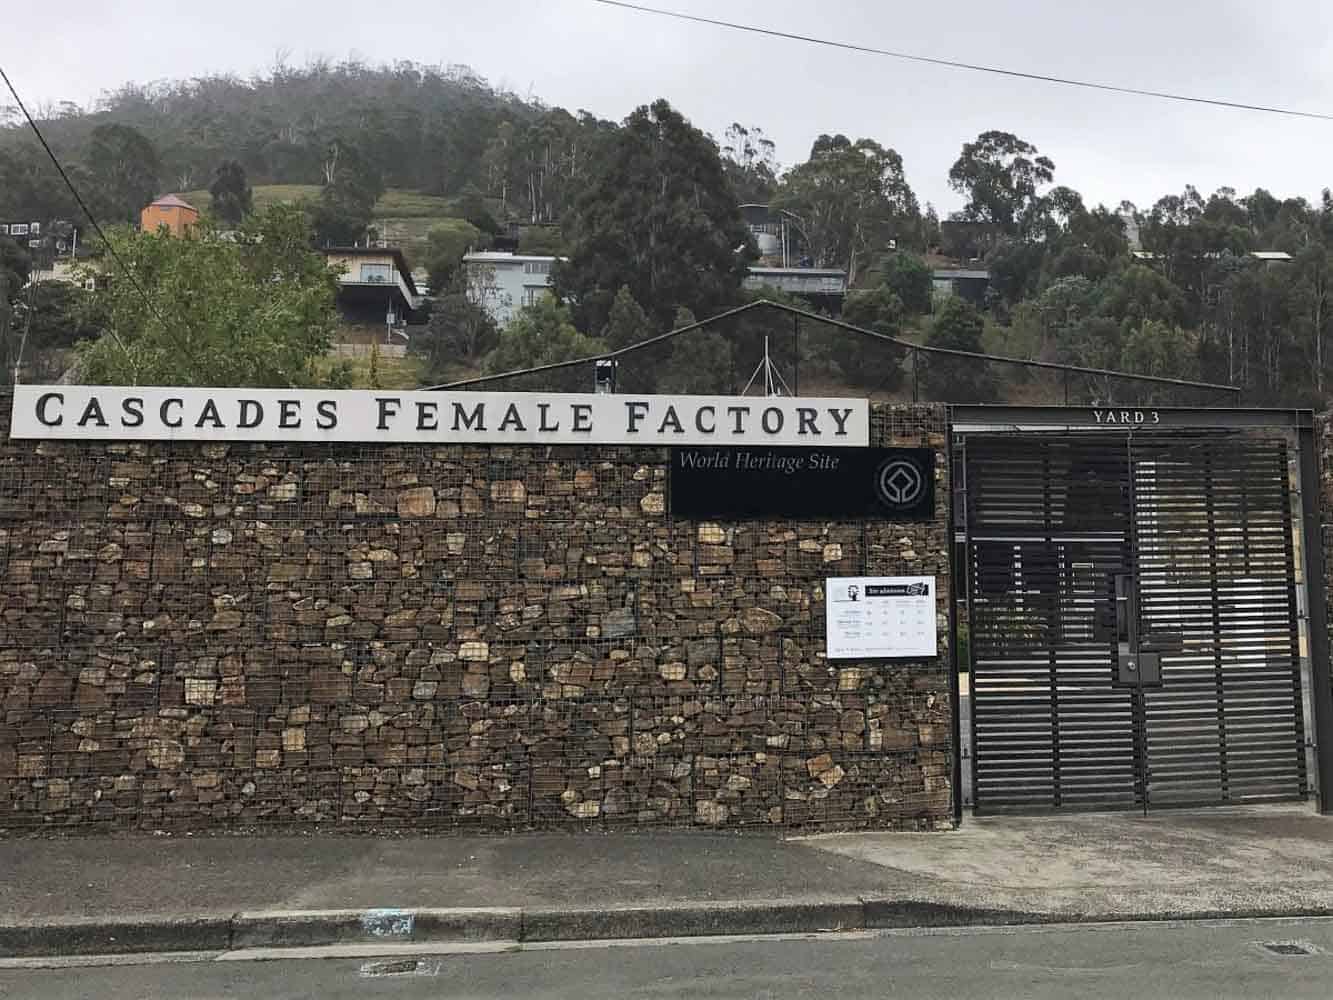 Cascades Female Factory